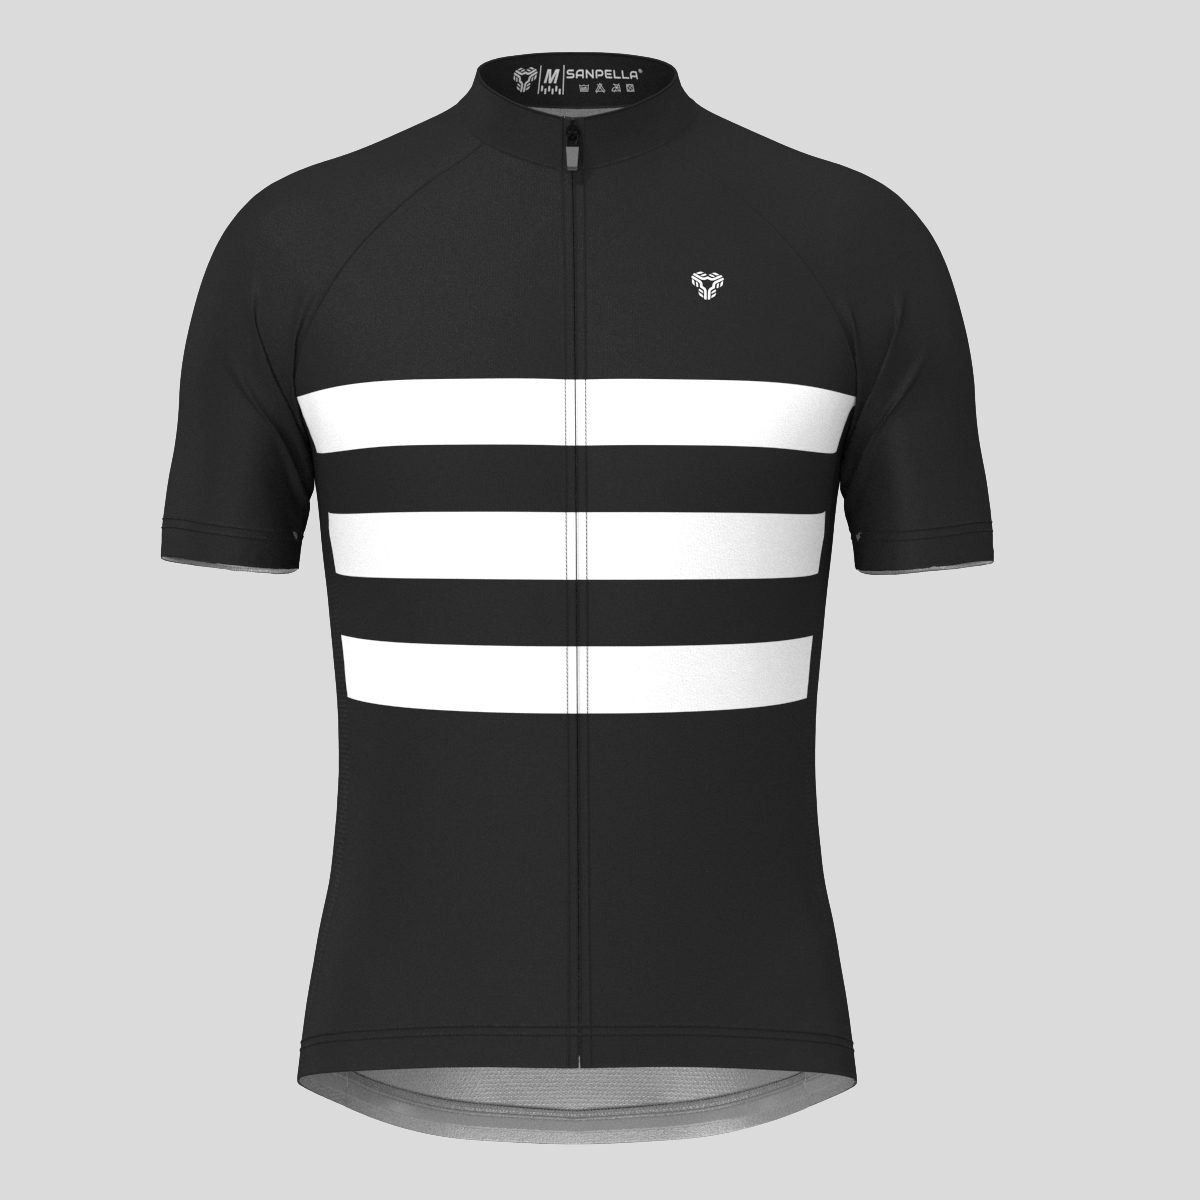 Men's Classic Stripes Cycling Jersey - Black/White